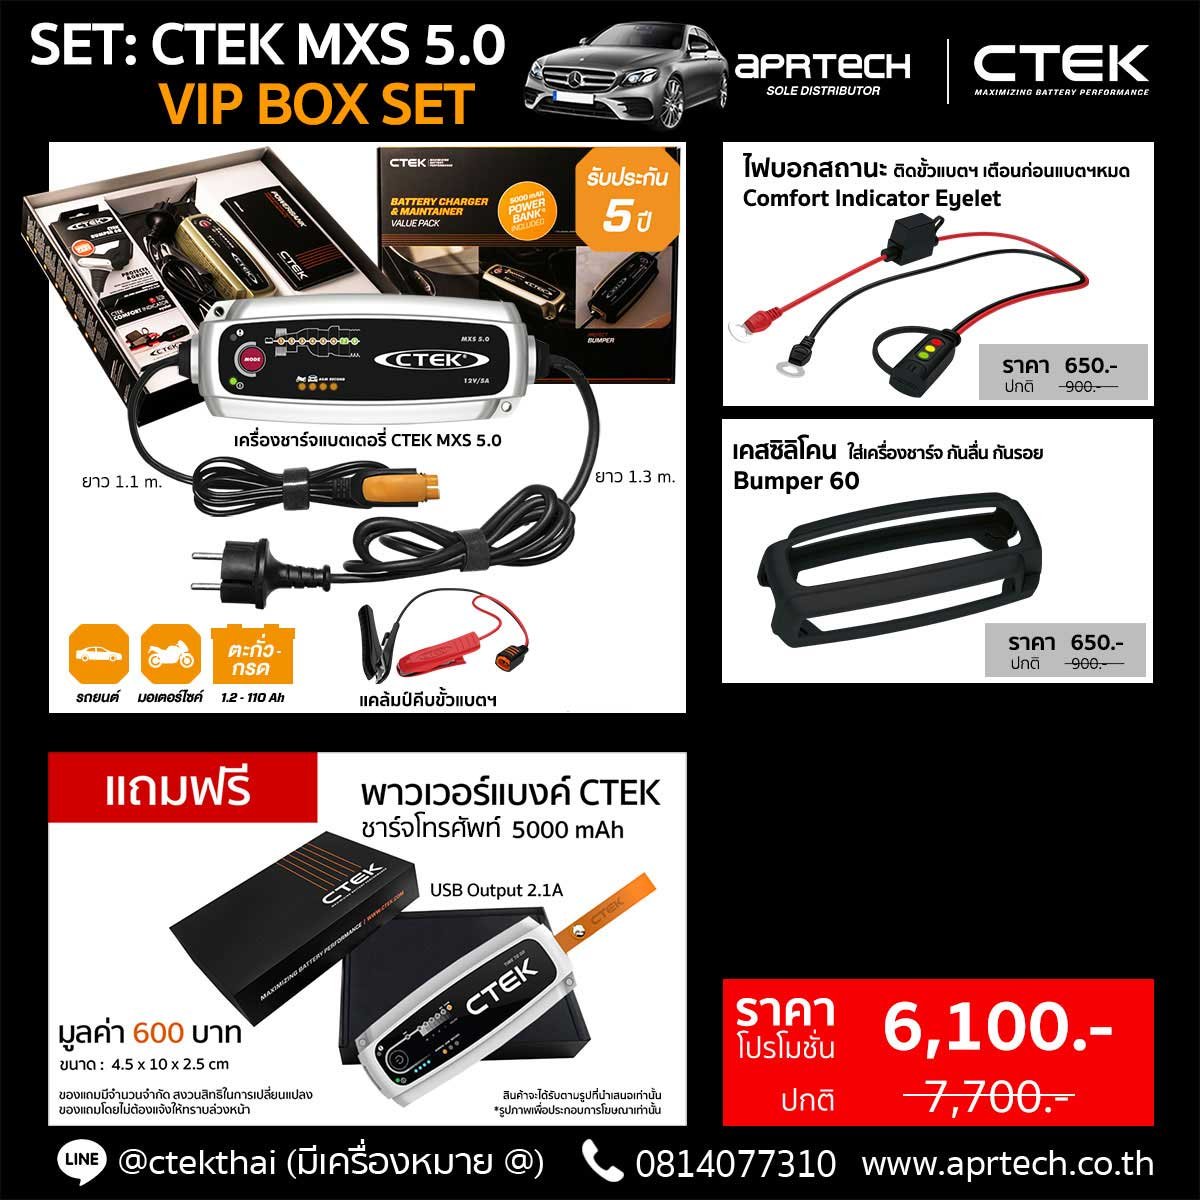 SET MXS 5.0 VIP READY BOX SET (MXS 5.0 + Indicator + Bumper)